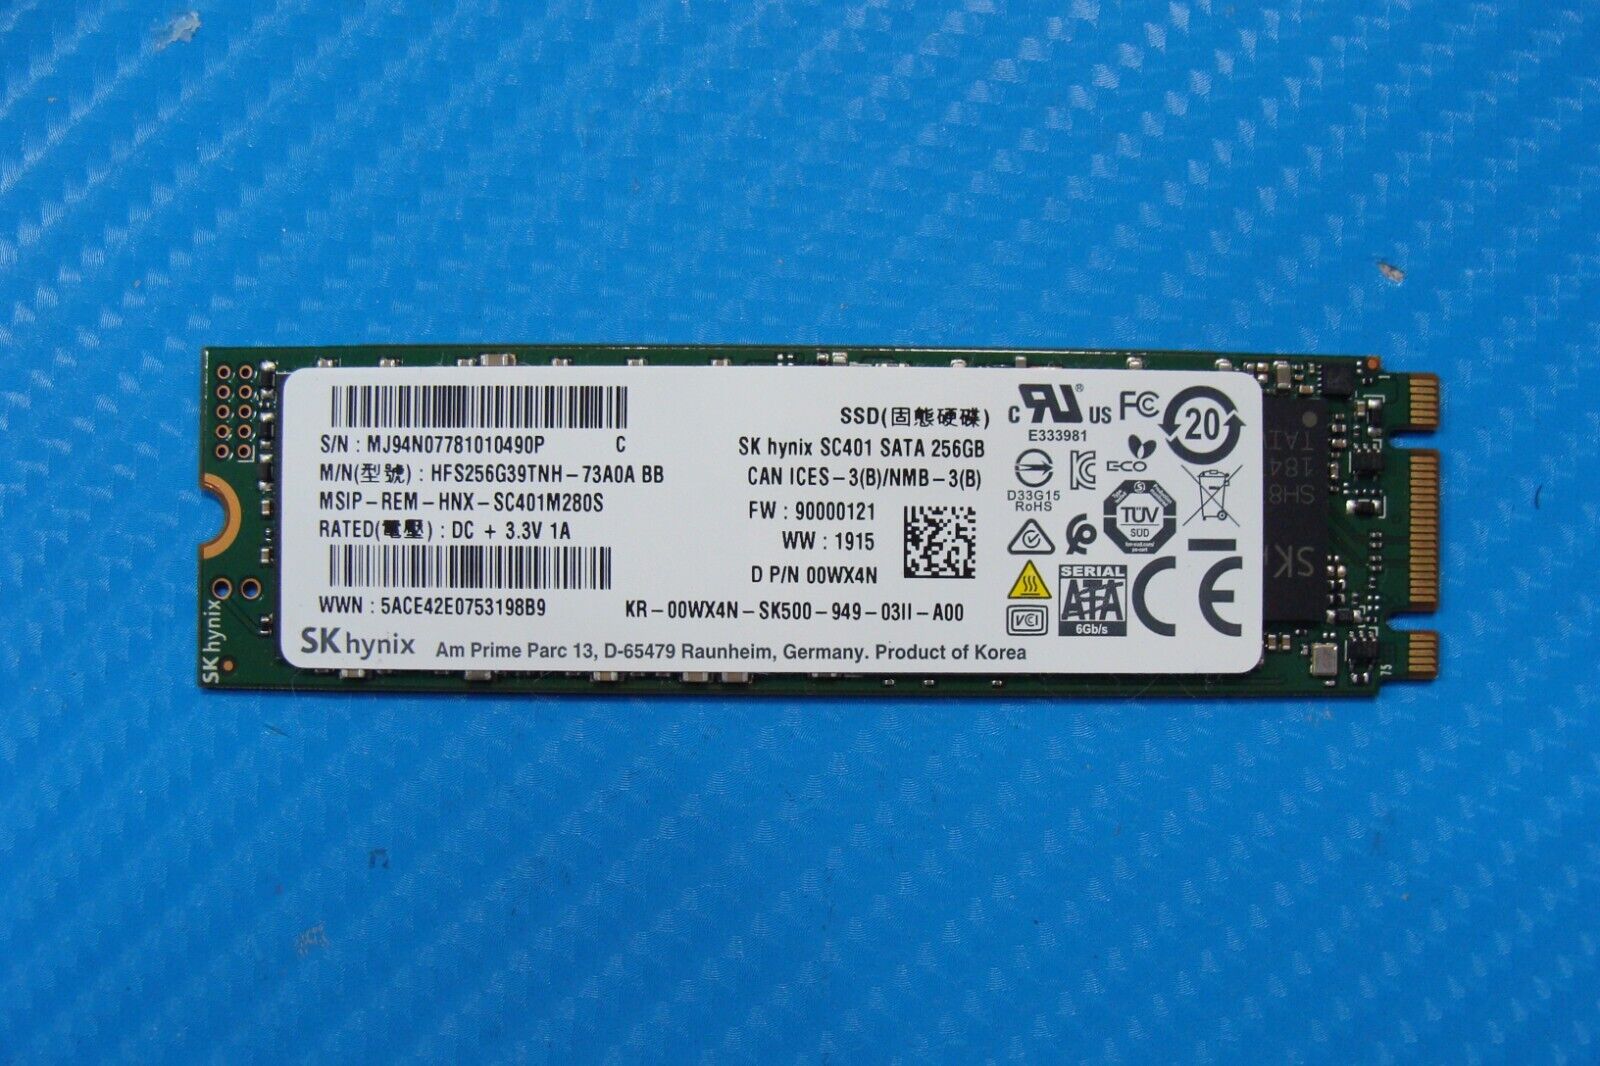 Dell 7490 SK Hynix 256GB SATA M.2 SSD Solid State Drive HFS256G39TNH-73A0A 0WX4N